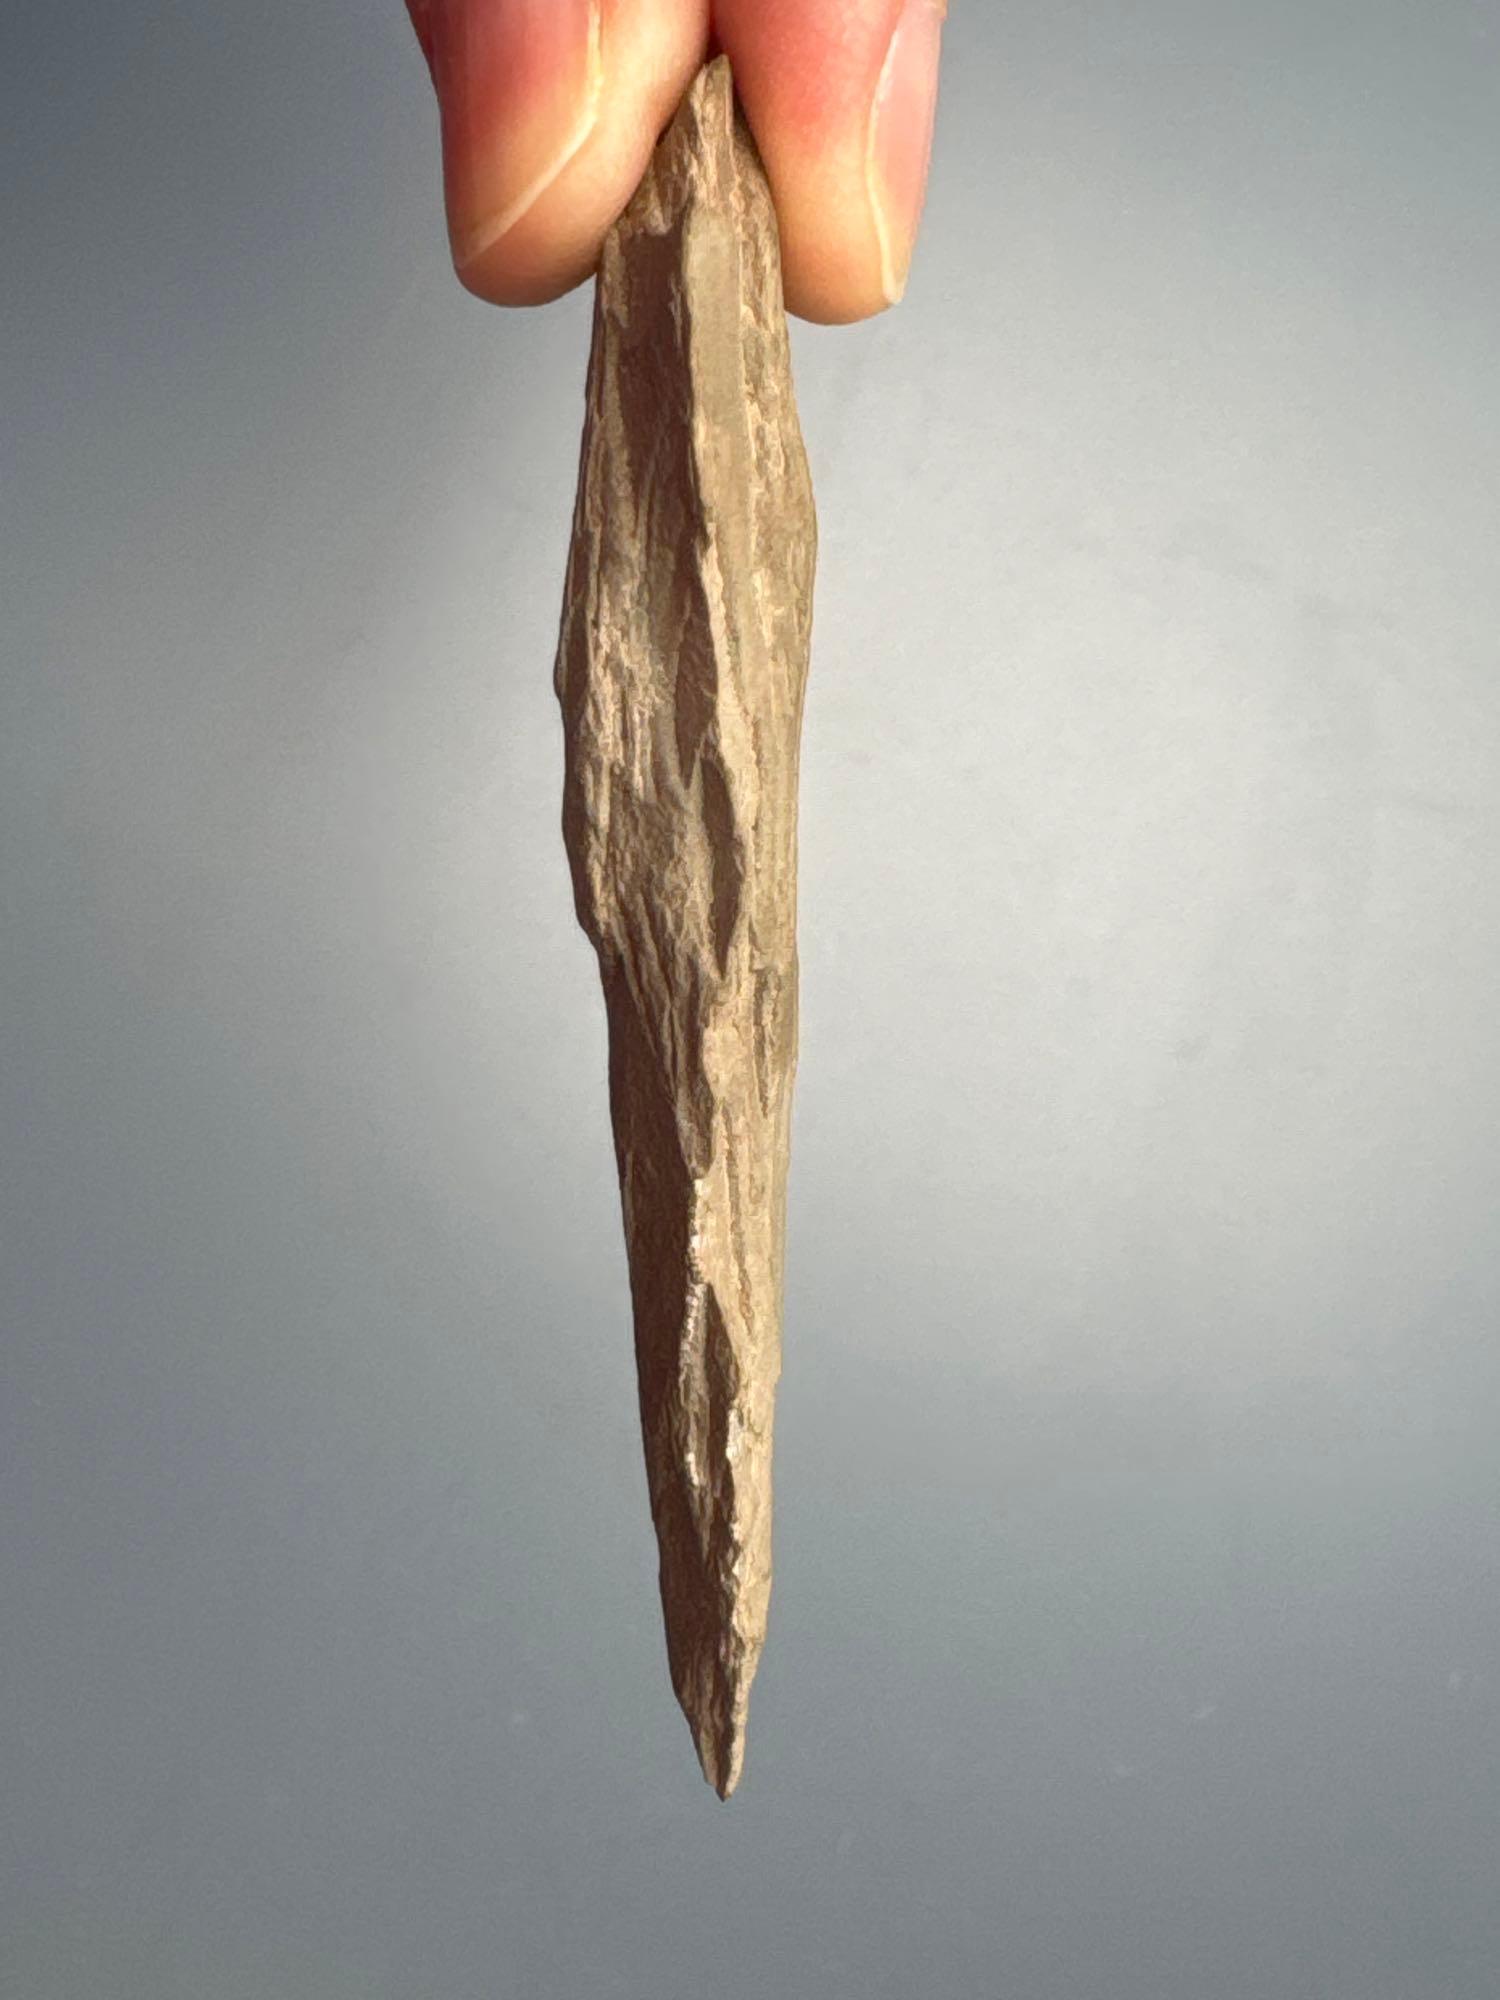 Lot of 11 Arrowheads, Longest is 3 1/16", Found in Jim Thorpe Area in Pennsylvania